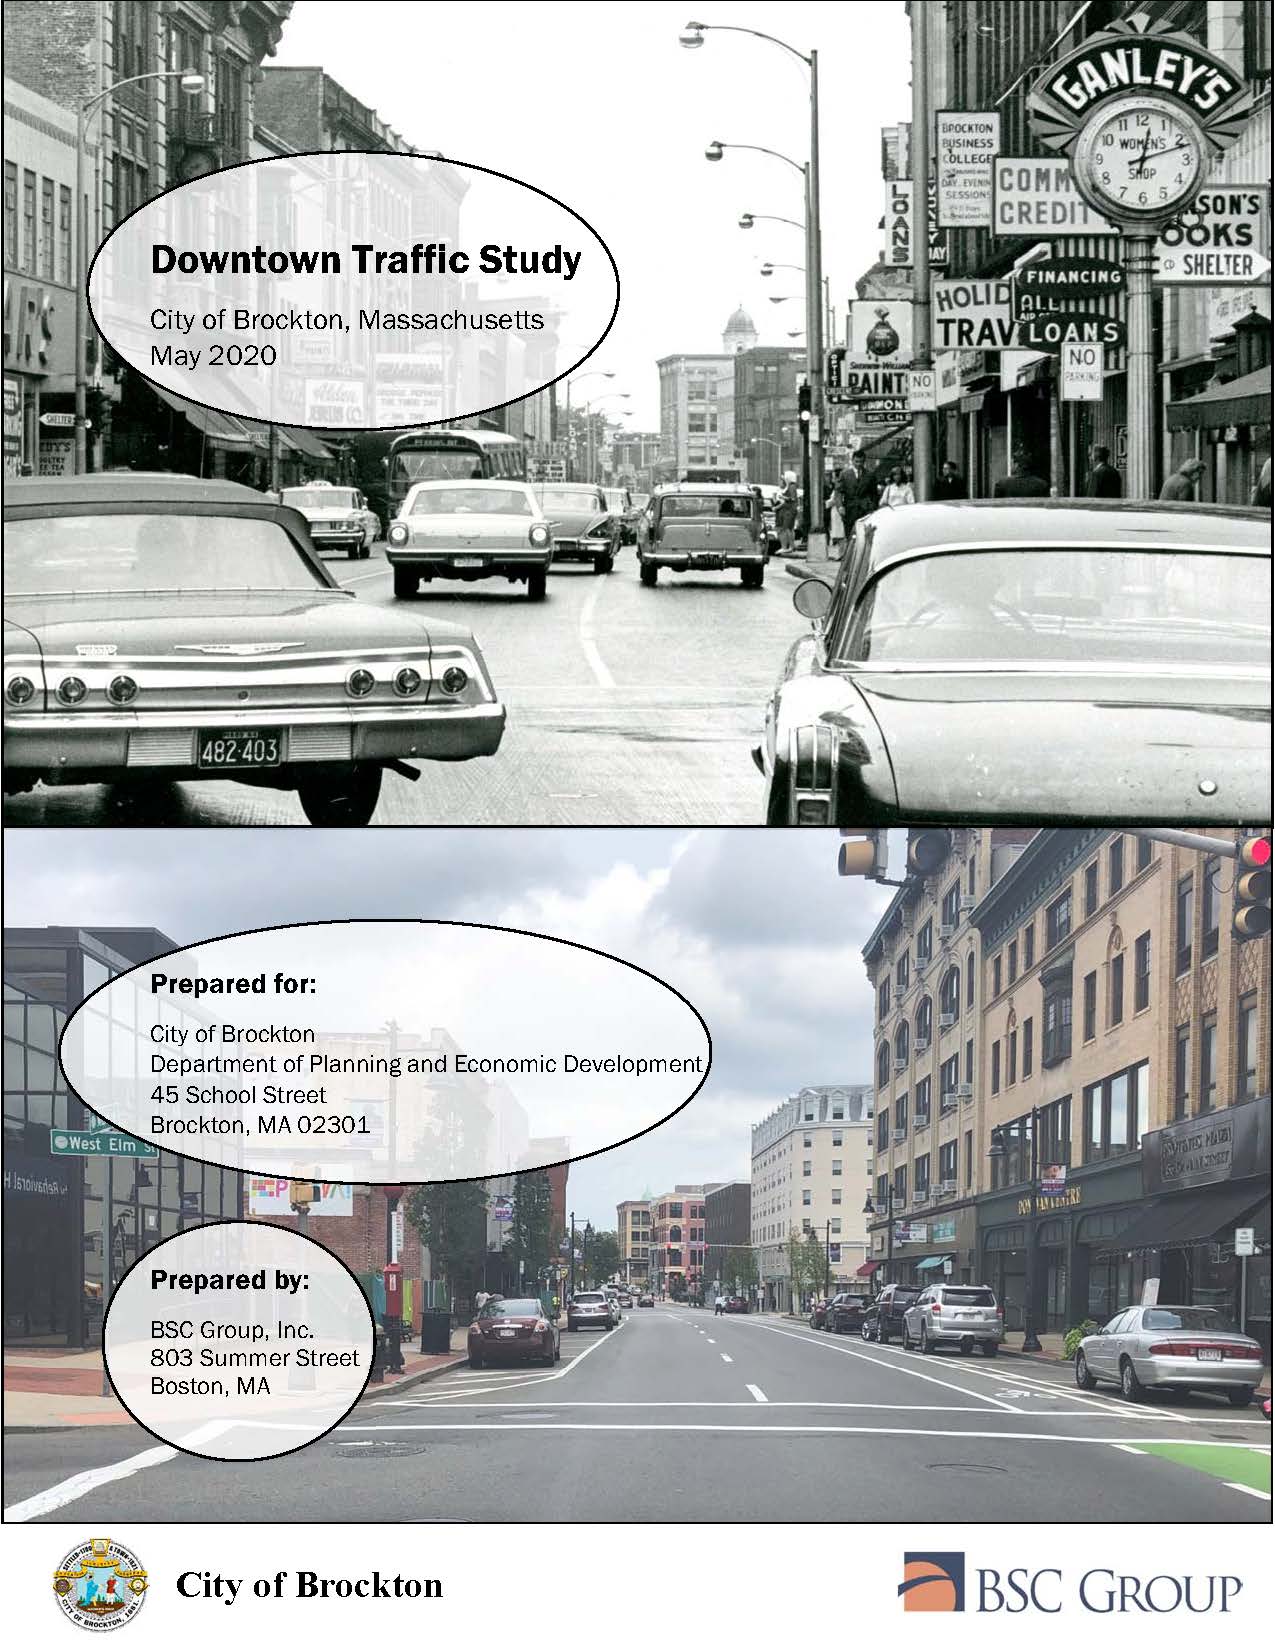 Downtown Brockton Traffic Study Image